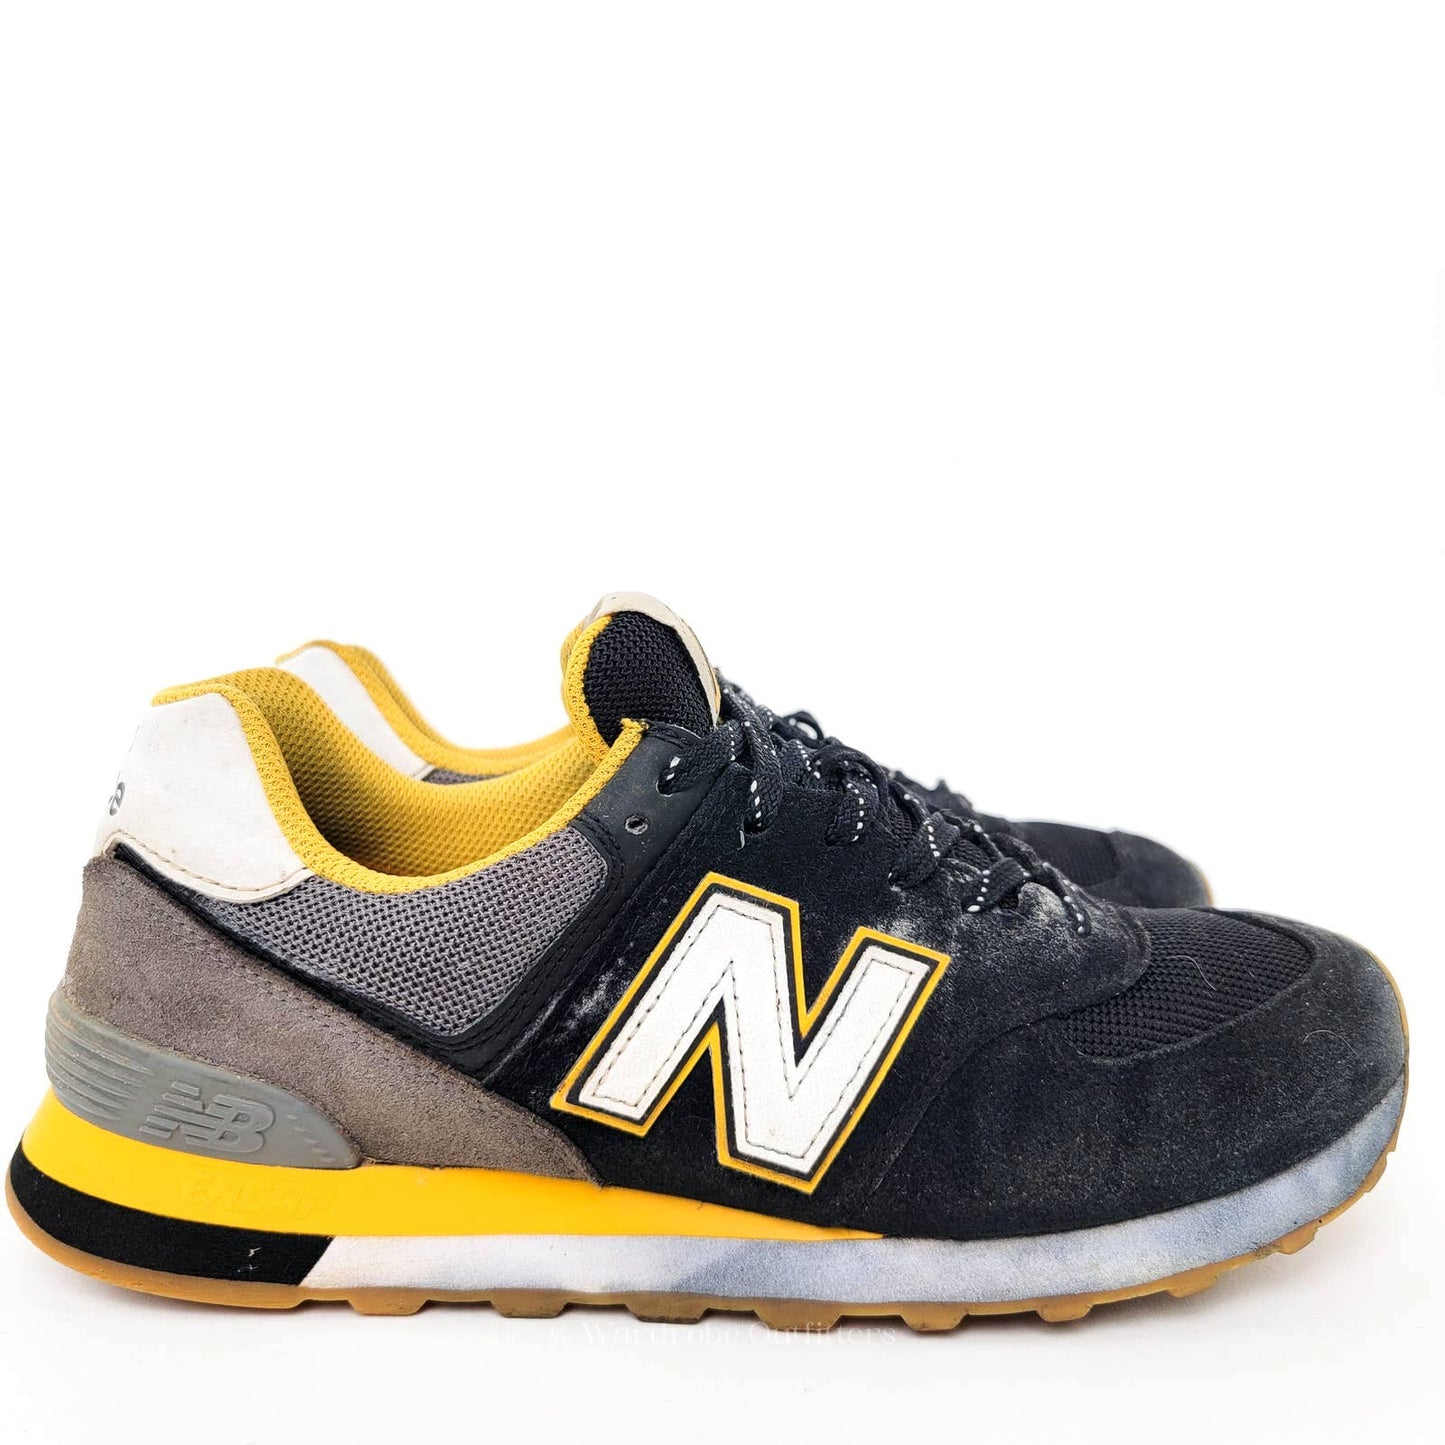 New Balance 574 'Black Gold' Marathon Running Shoes Sneakers